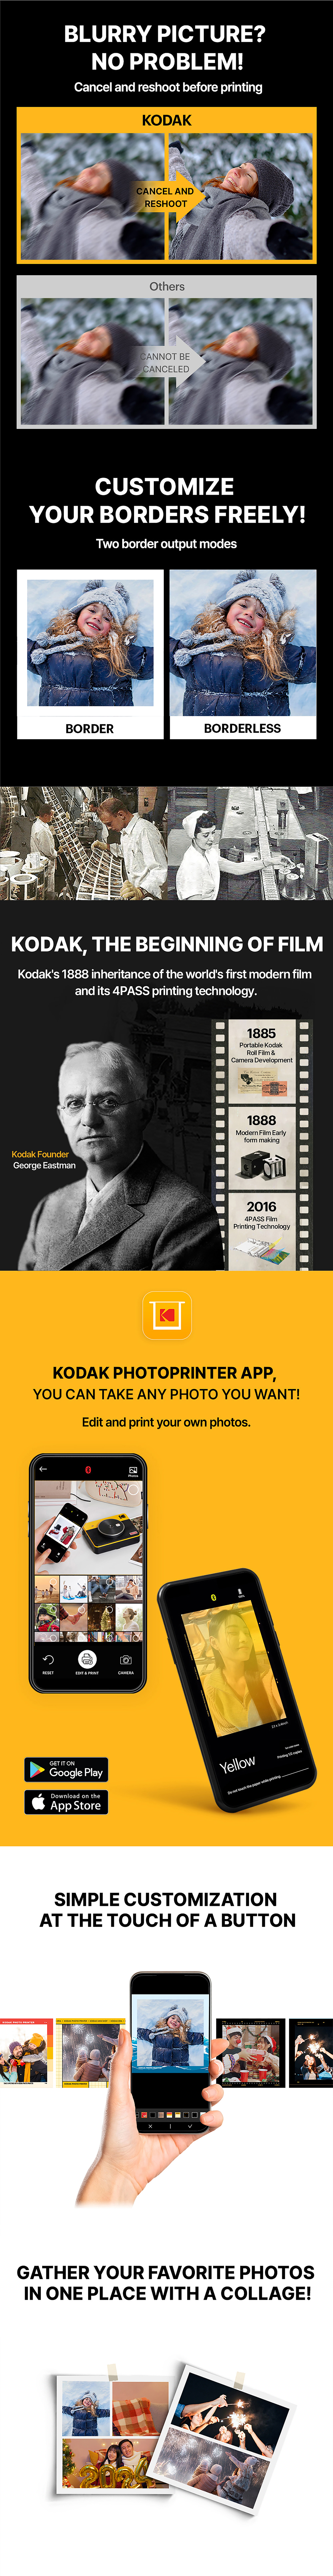 Kodak Mini Shot 3 Retro 4PASS 2-in-1 Instant Camera and Photo Printer (3x3 inches) + 68 Sheets Gift Bundle, White